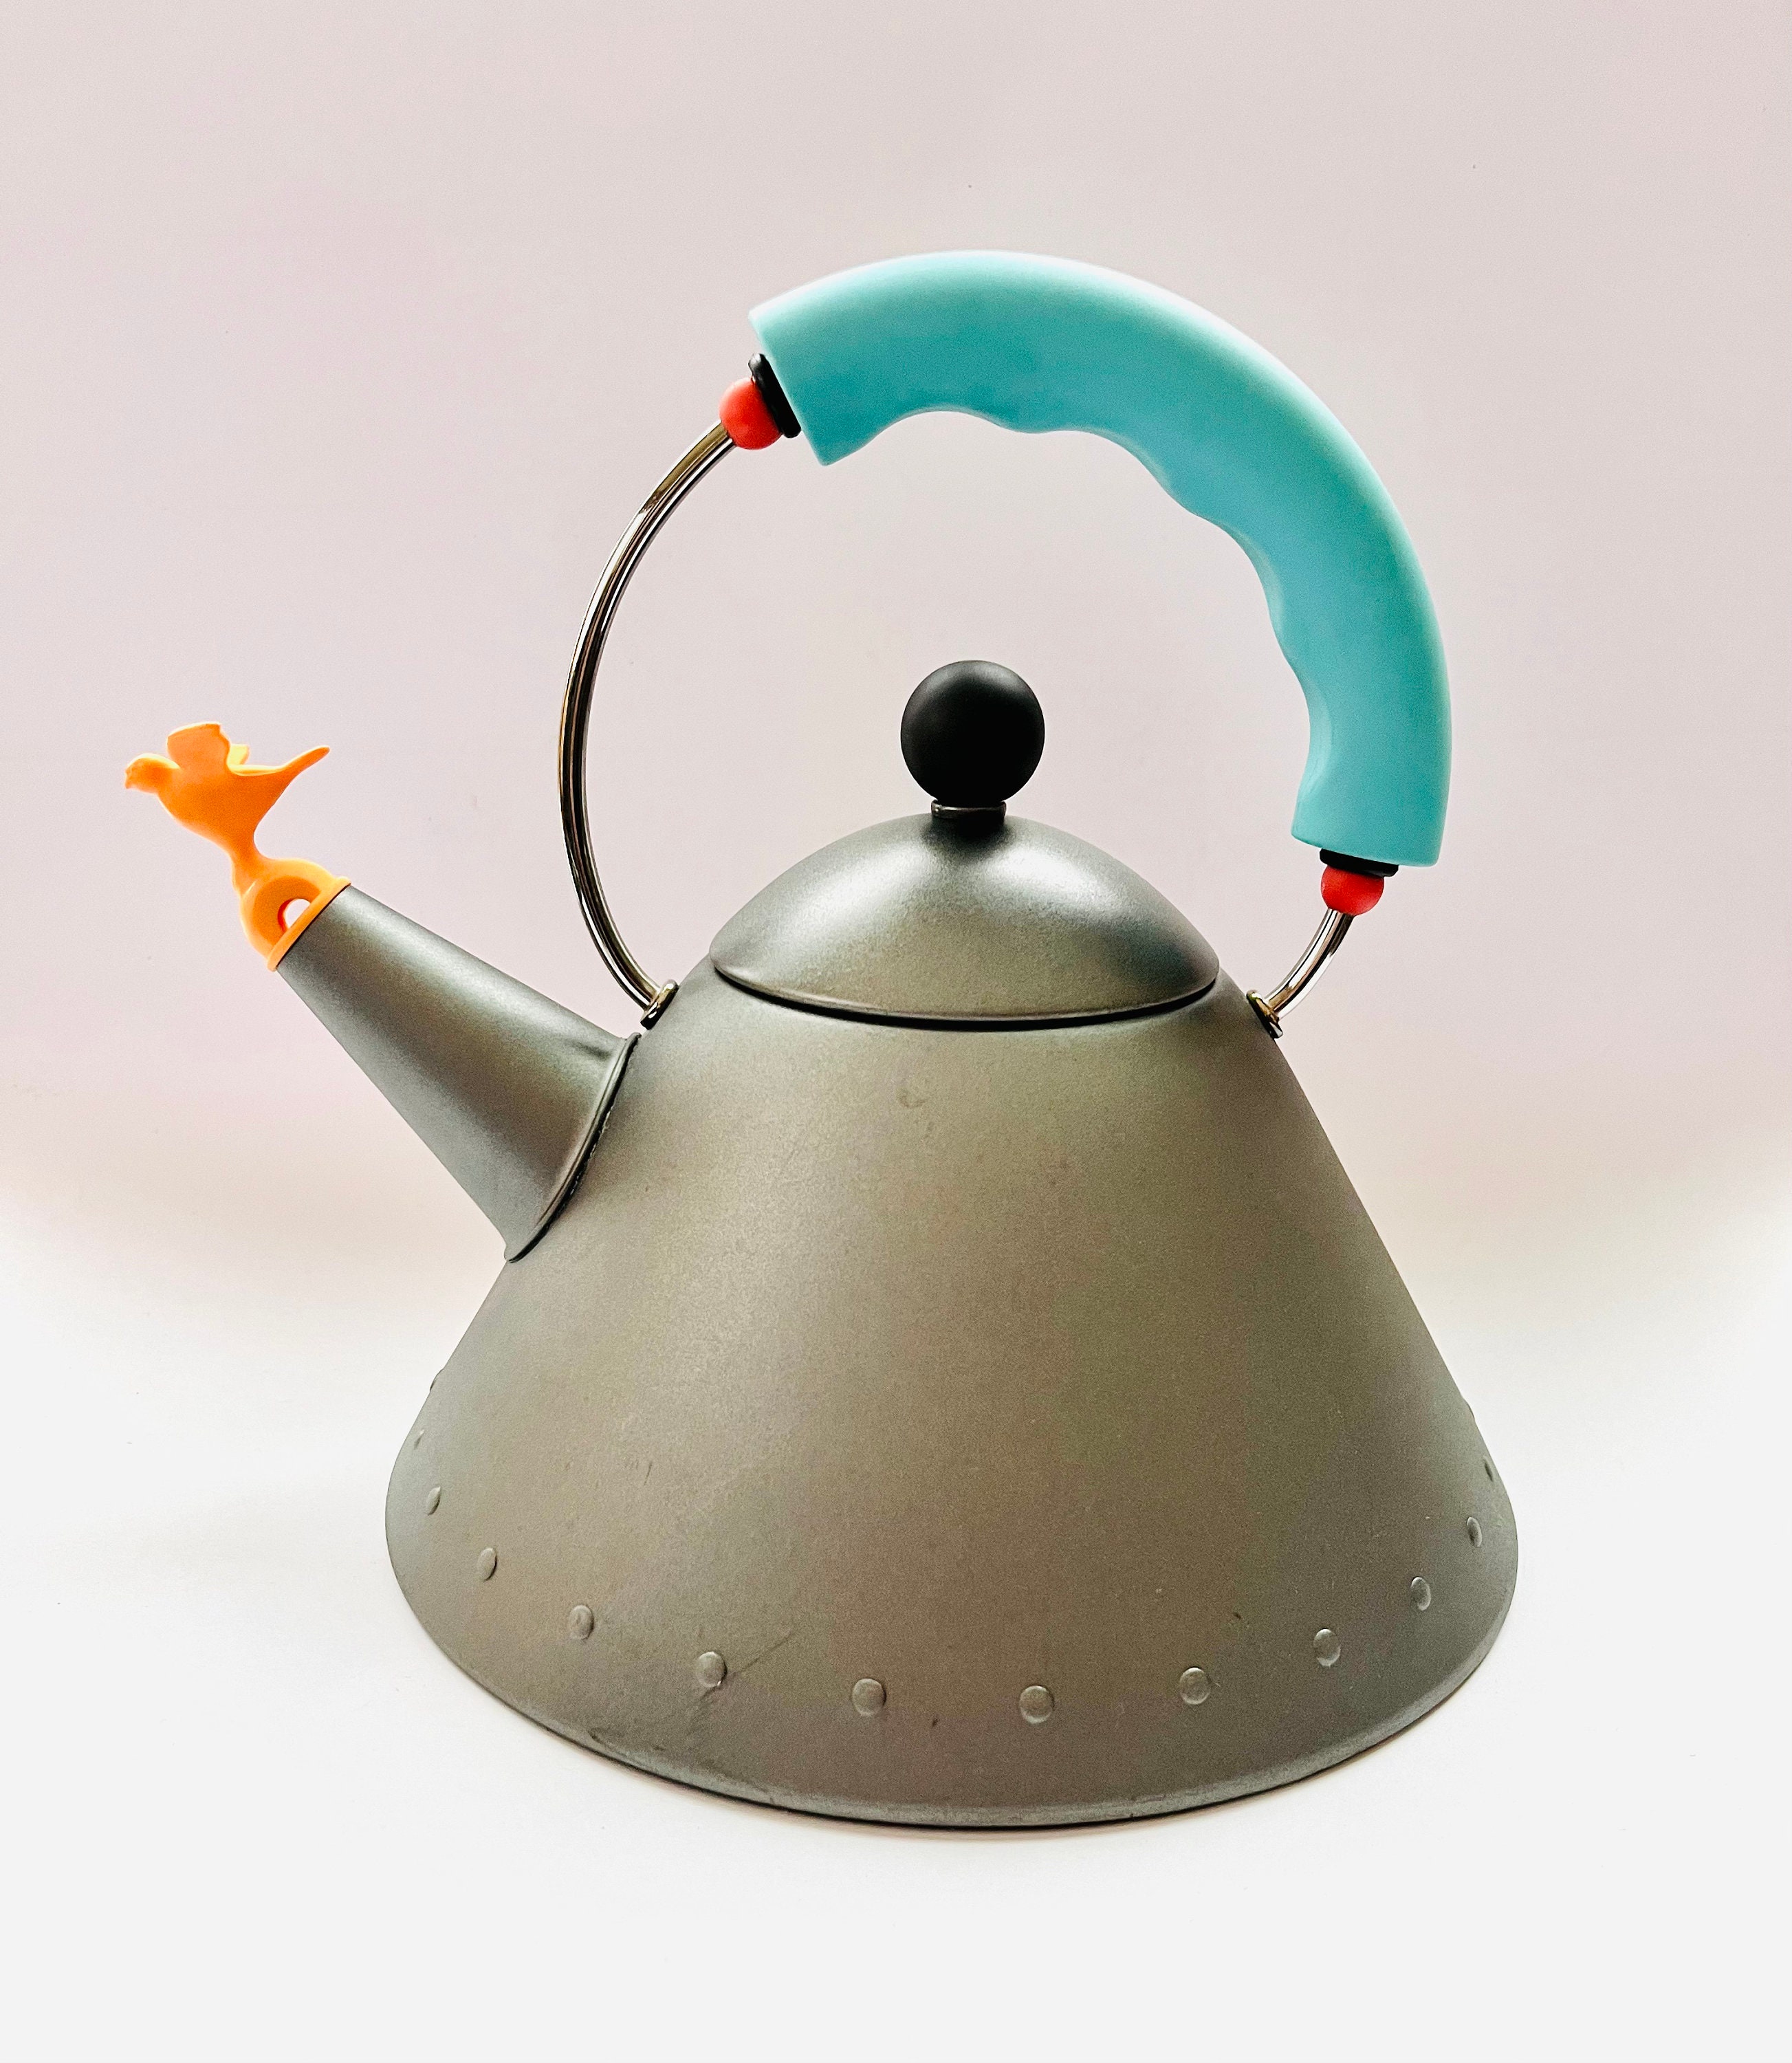 Whistling Tea Kettle for Stove Top Enamel on Steel Teakettle, Supreme  Housewares Tennis Ball Design Teapot Water Kettle Cute Kitchen Accessories